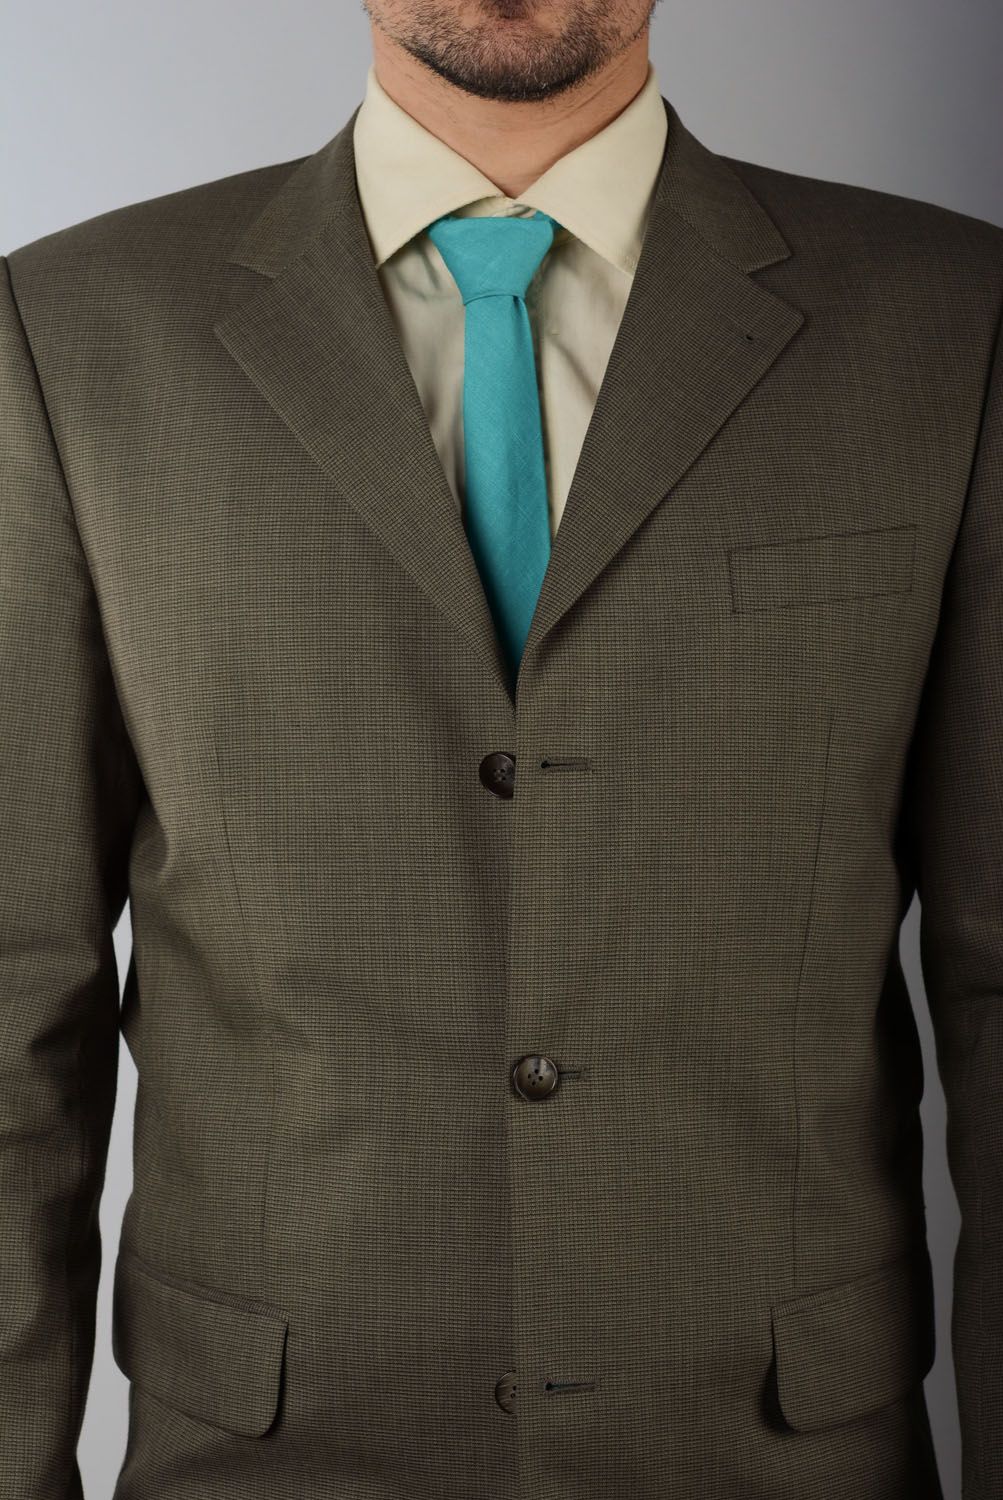 Cravate en lin bleue faite main photo 4